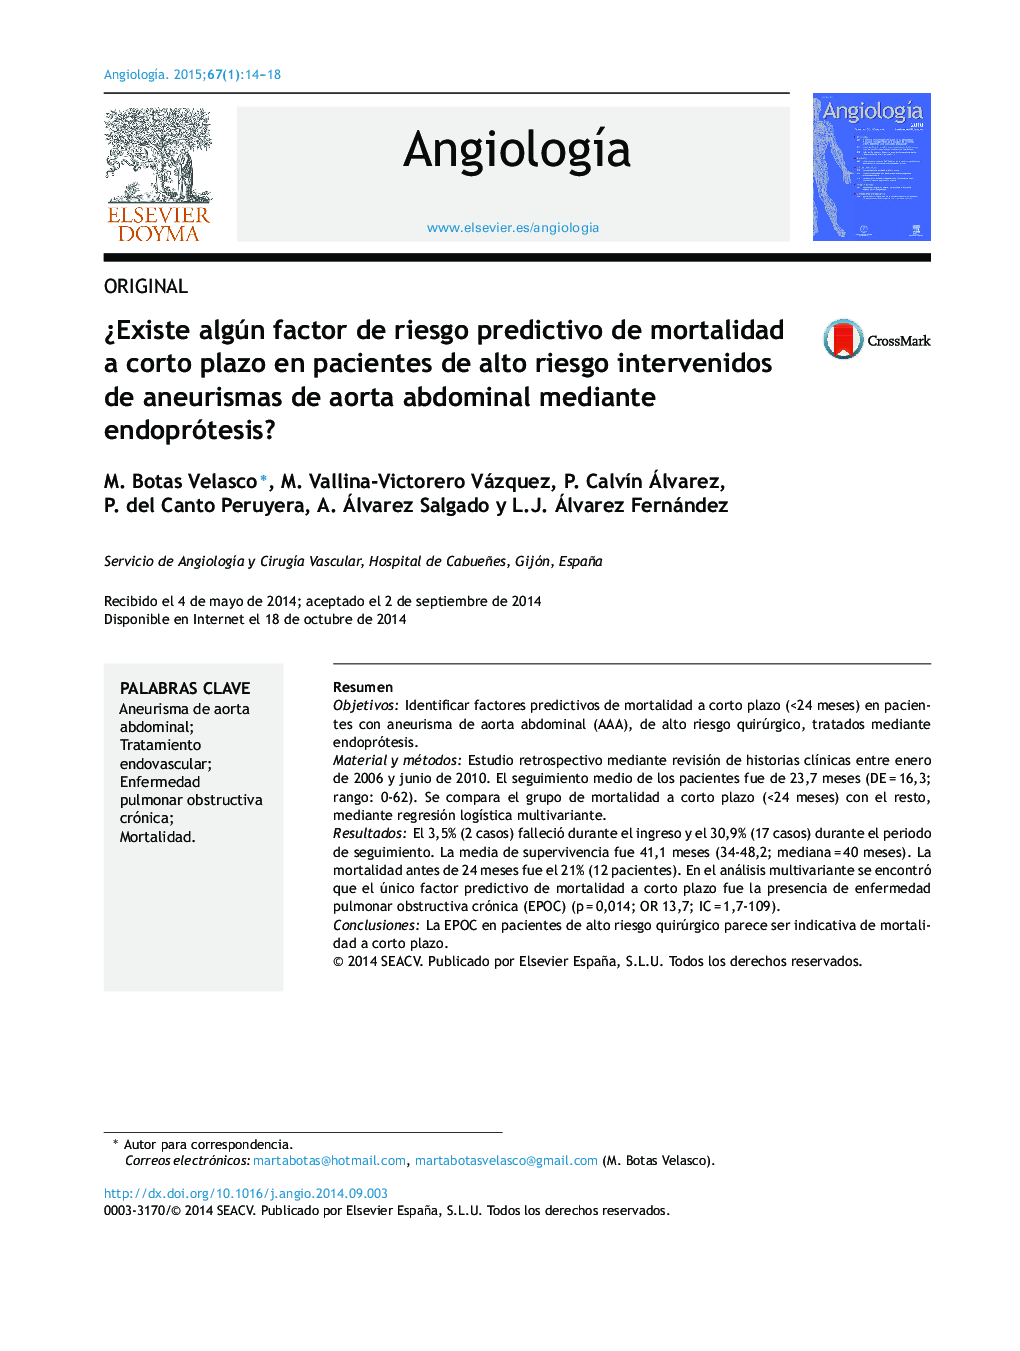 Â¿Existe algún factor de riesgo predictivo de mortalidad a corto plazo en pacientes de alto riesgo intervenidos de aneurismas de aorta abdominal mediante endoprótesis?